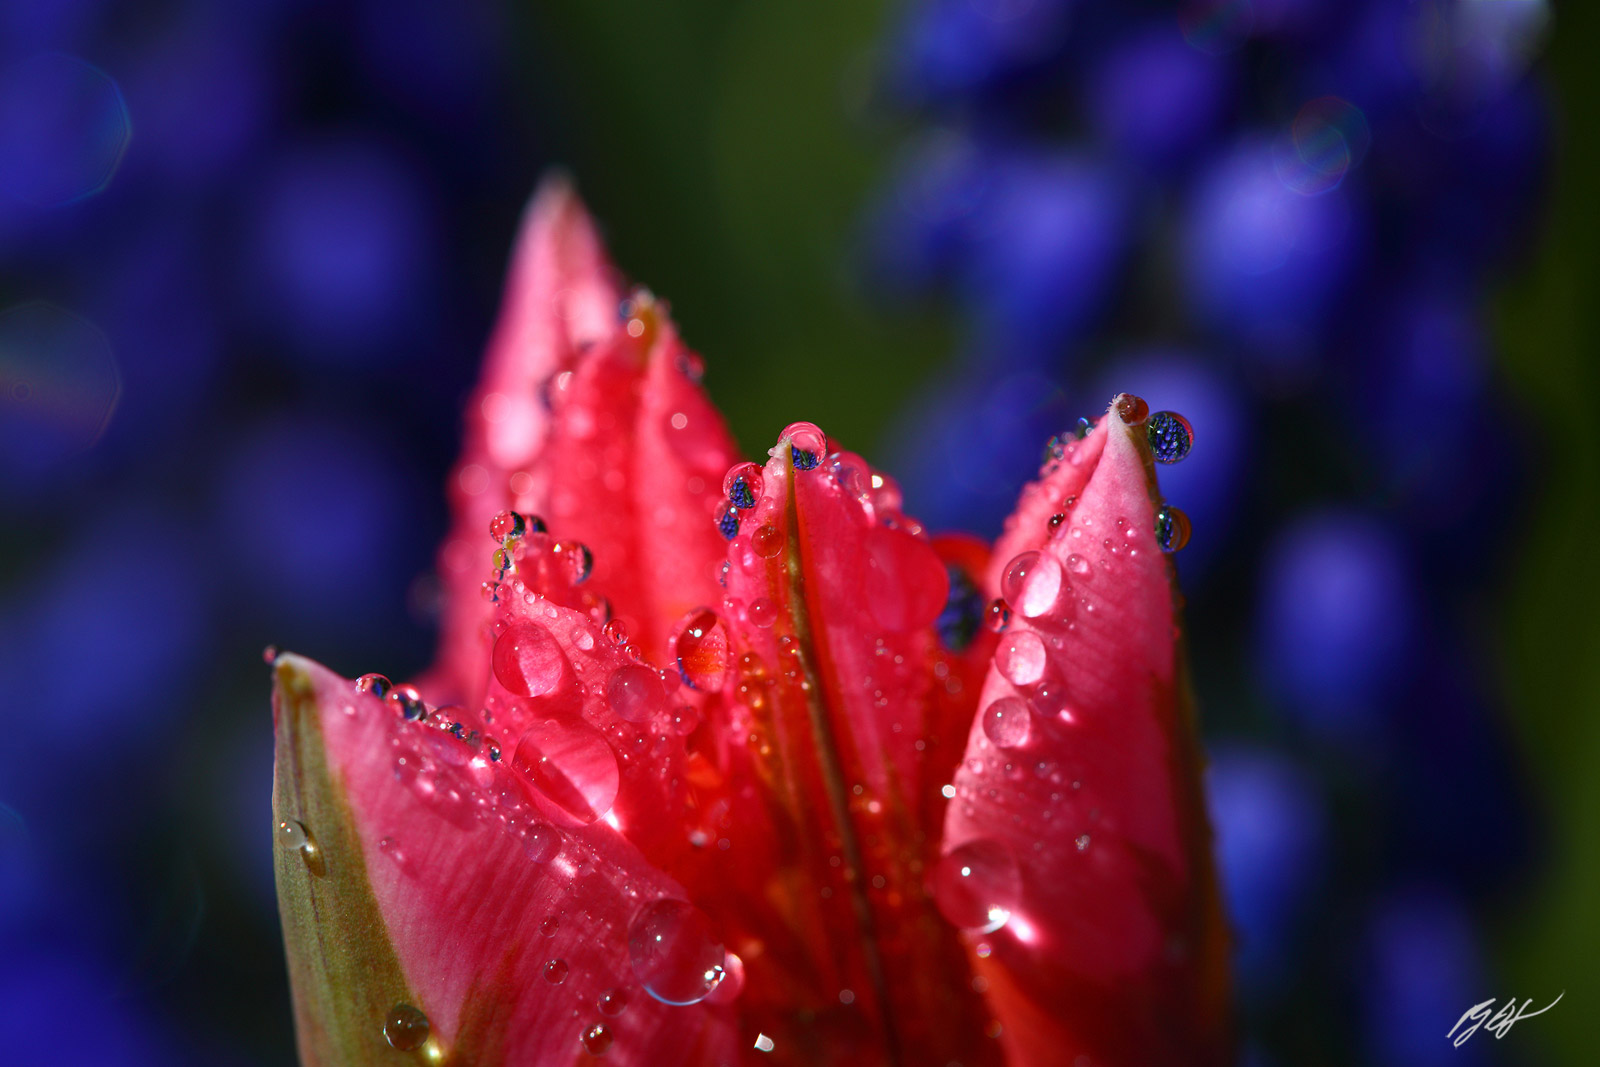 Flowers Captured inside Raindrops on a Tulip in the Roozengaarde Garden in Skagit Valley in Washington